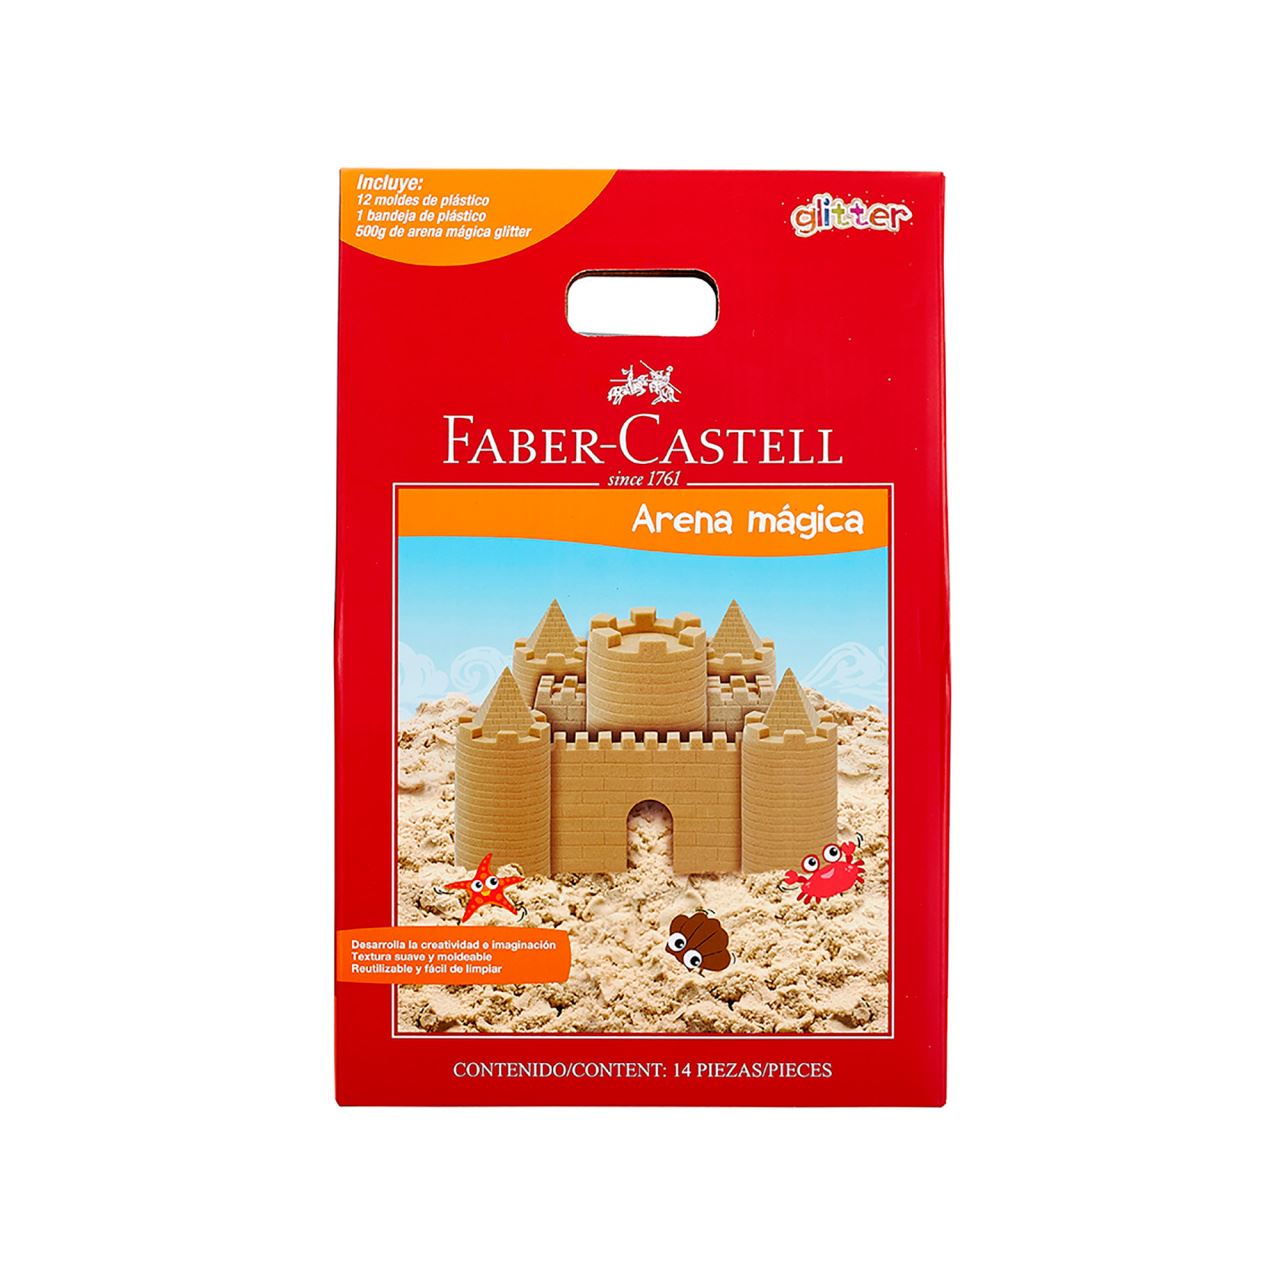 Faber-Castell - Arena mágica std 300g + 6 moldes